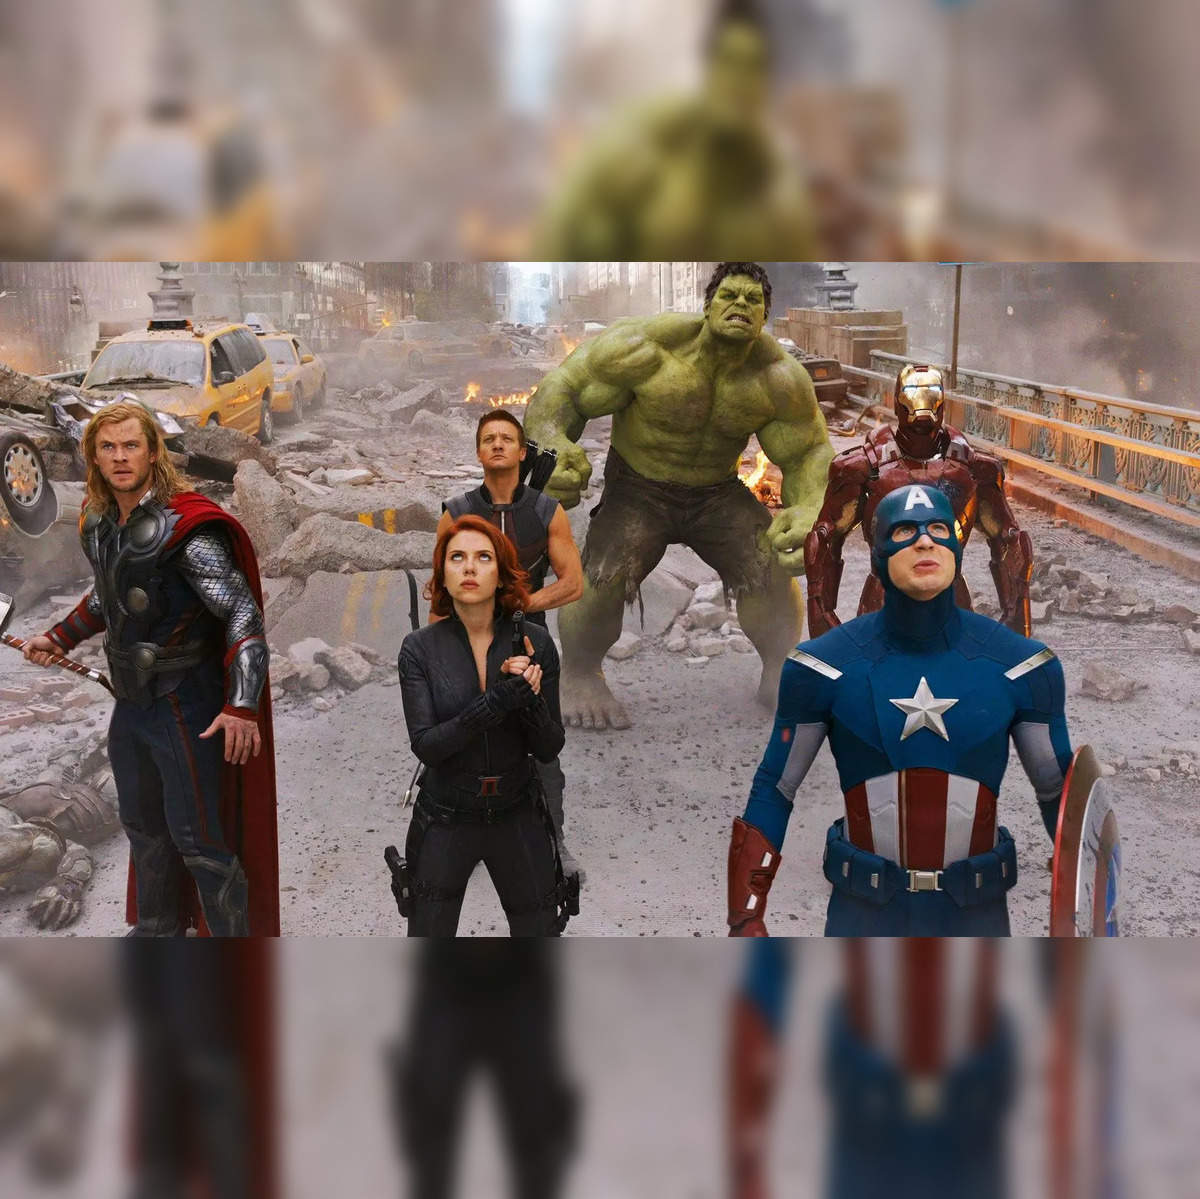 Avengers: Secret Wars release date, cast, plot, and more